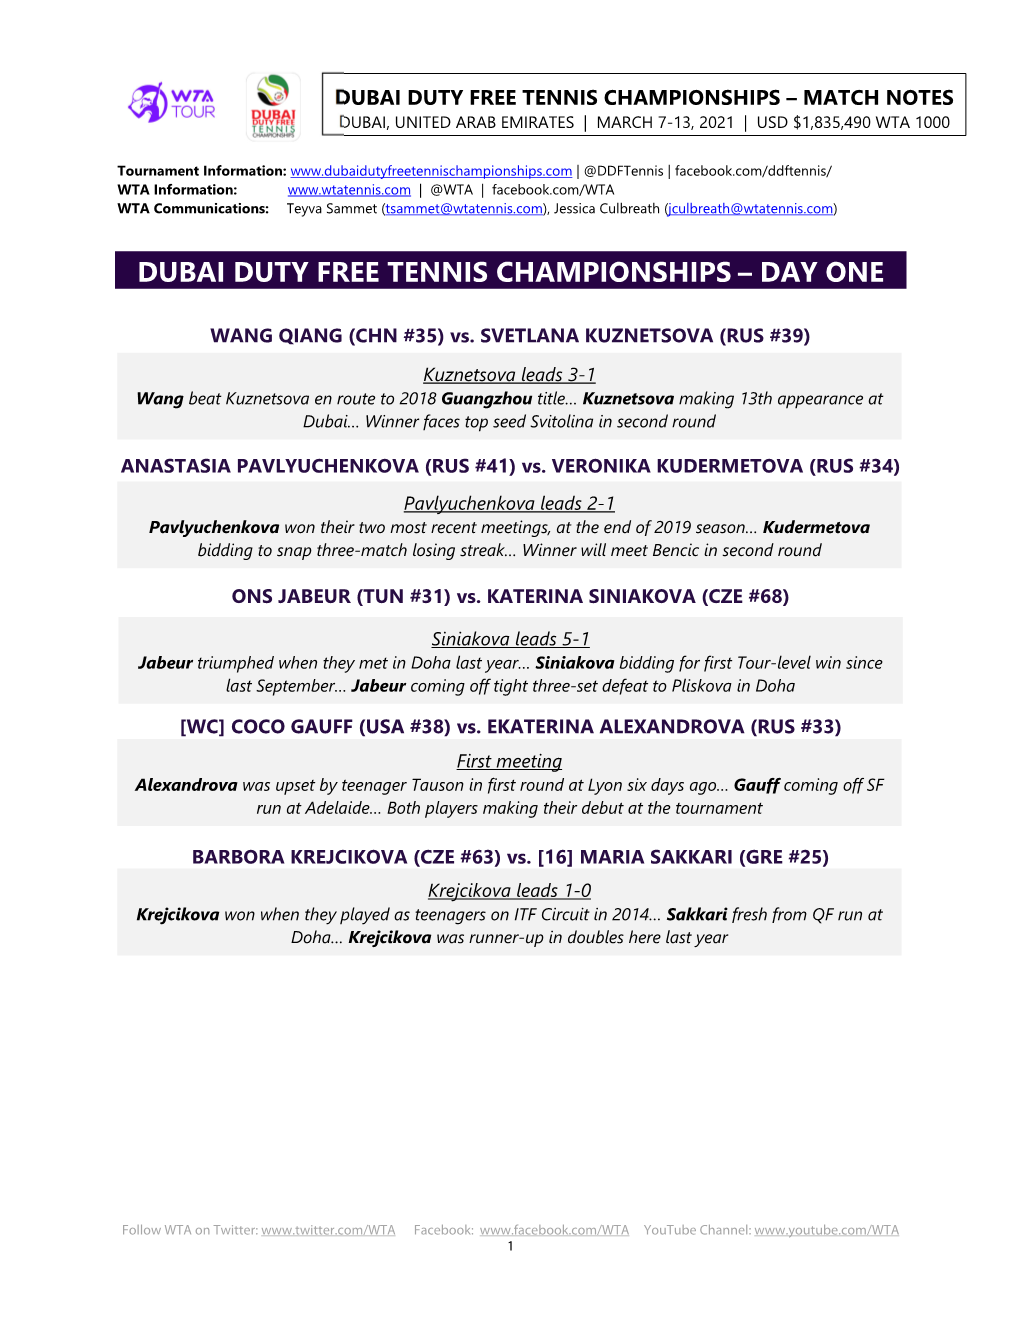 Dubai Duty Free Tennis Championships – Match Notes Dubai, United Arab Emirates | March 7-13, 2021 | Usd $1,835,490 Wta 1000